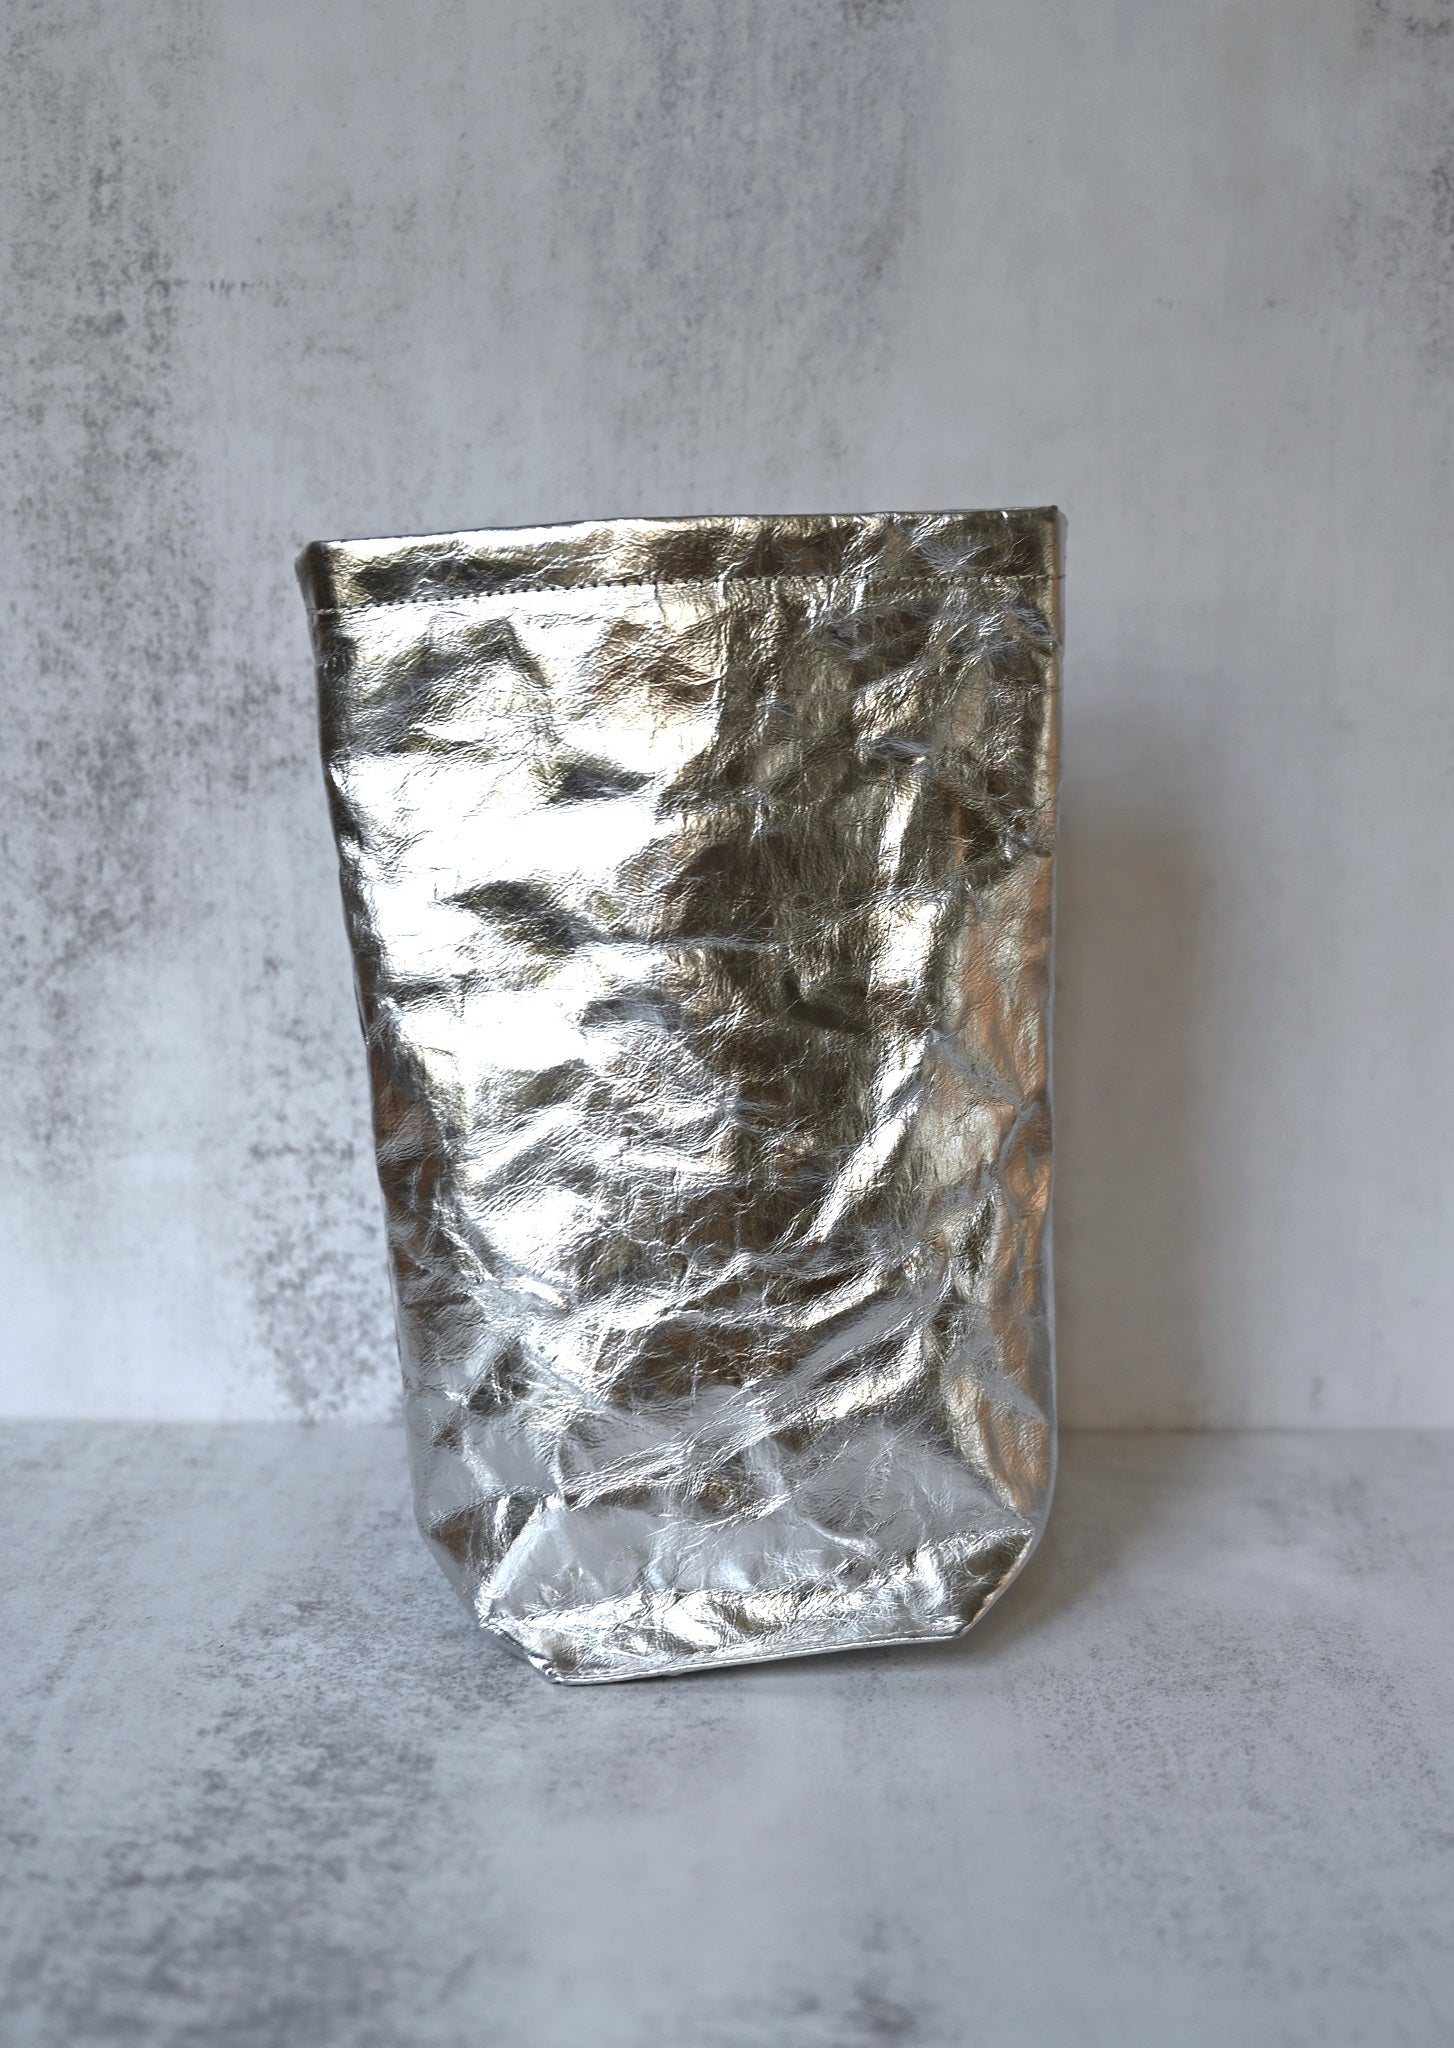 Uashmama Weinkühler – Silber